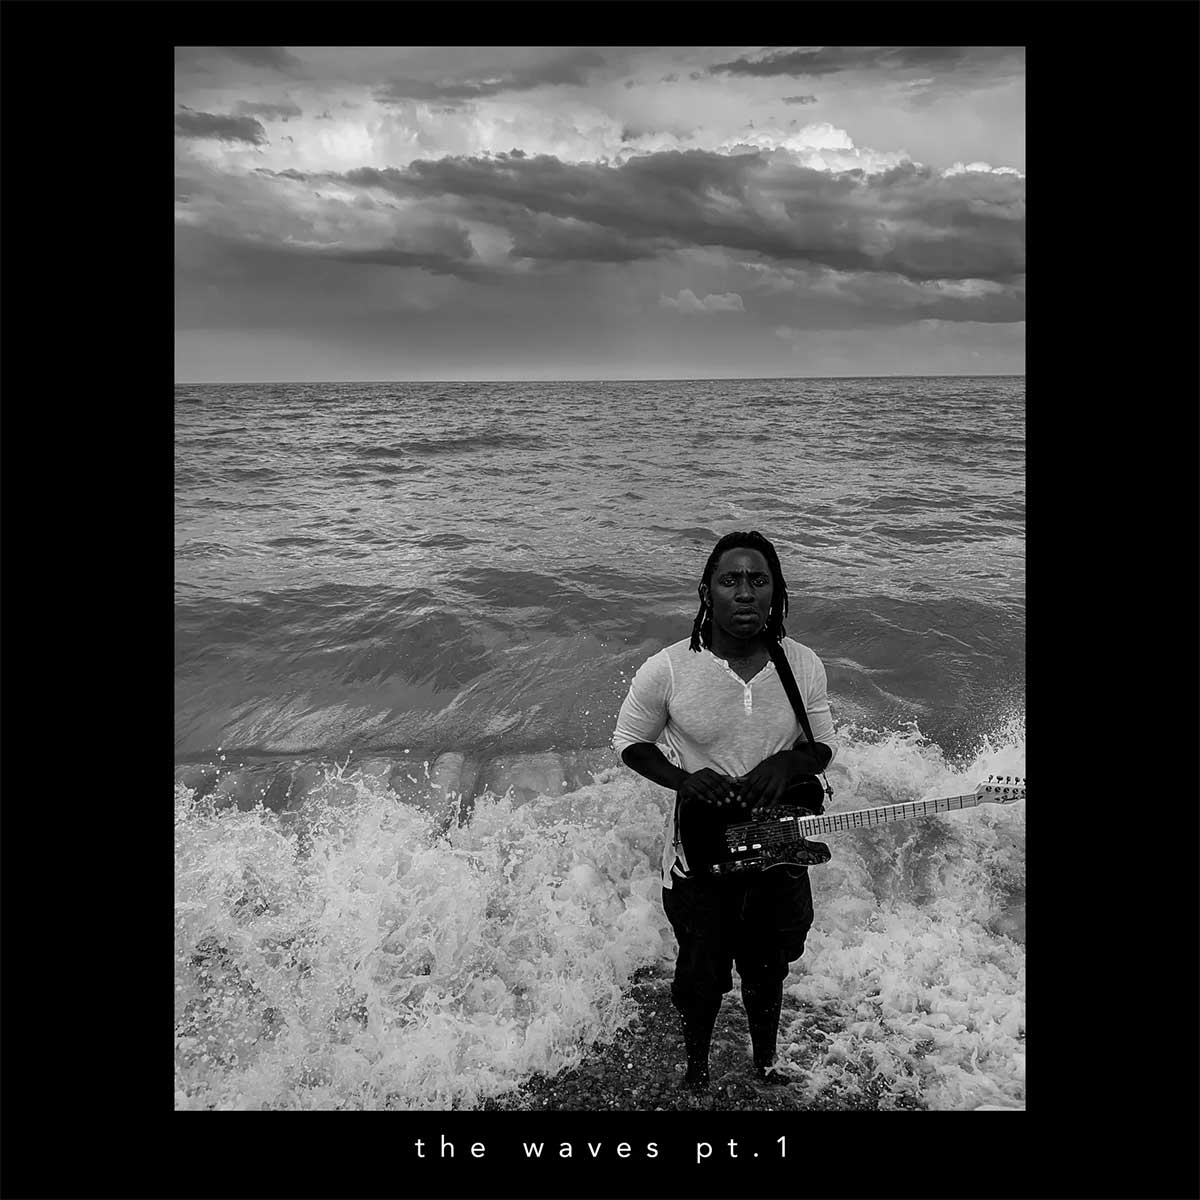 Tapa de "The Waves Pt. 1", disco de Kele